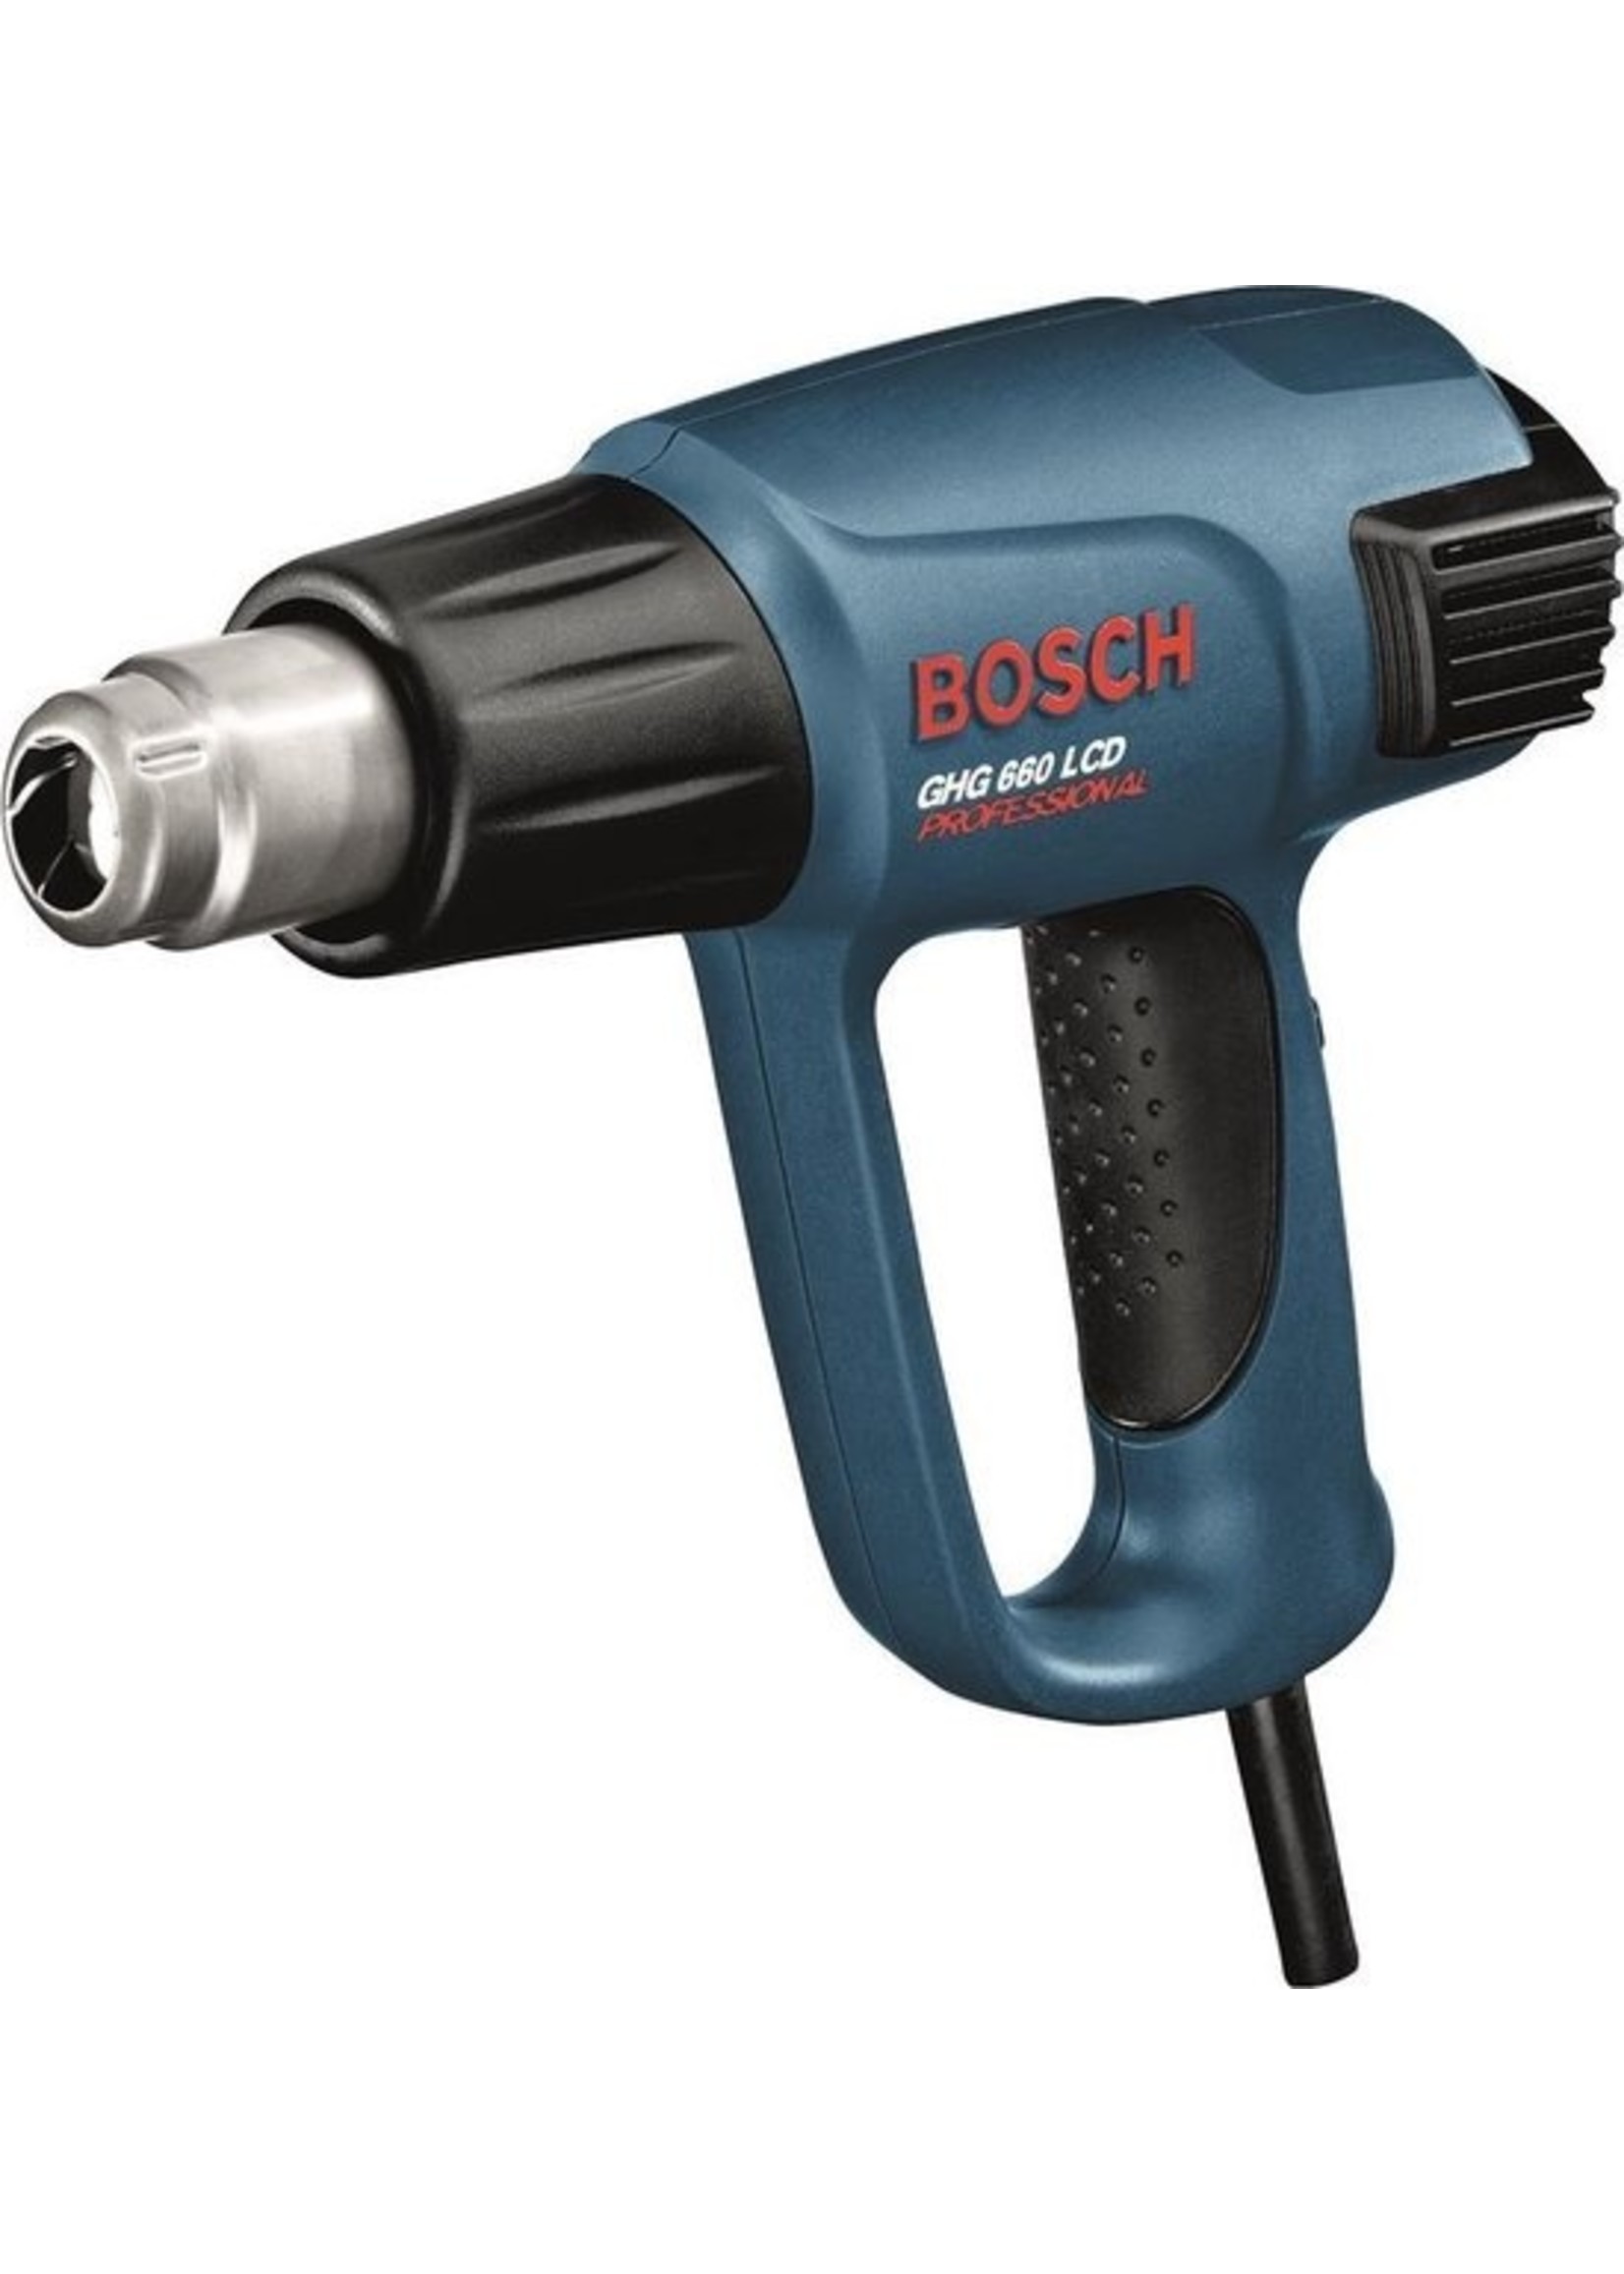 Bosch Bosch GHG 23-66 small kit Heteluchtpistool incl. mondstukken in koffer - 2300W